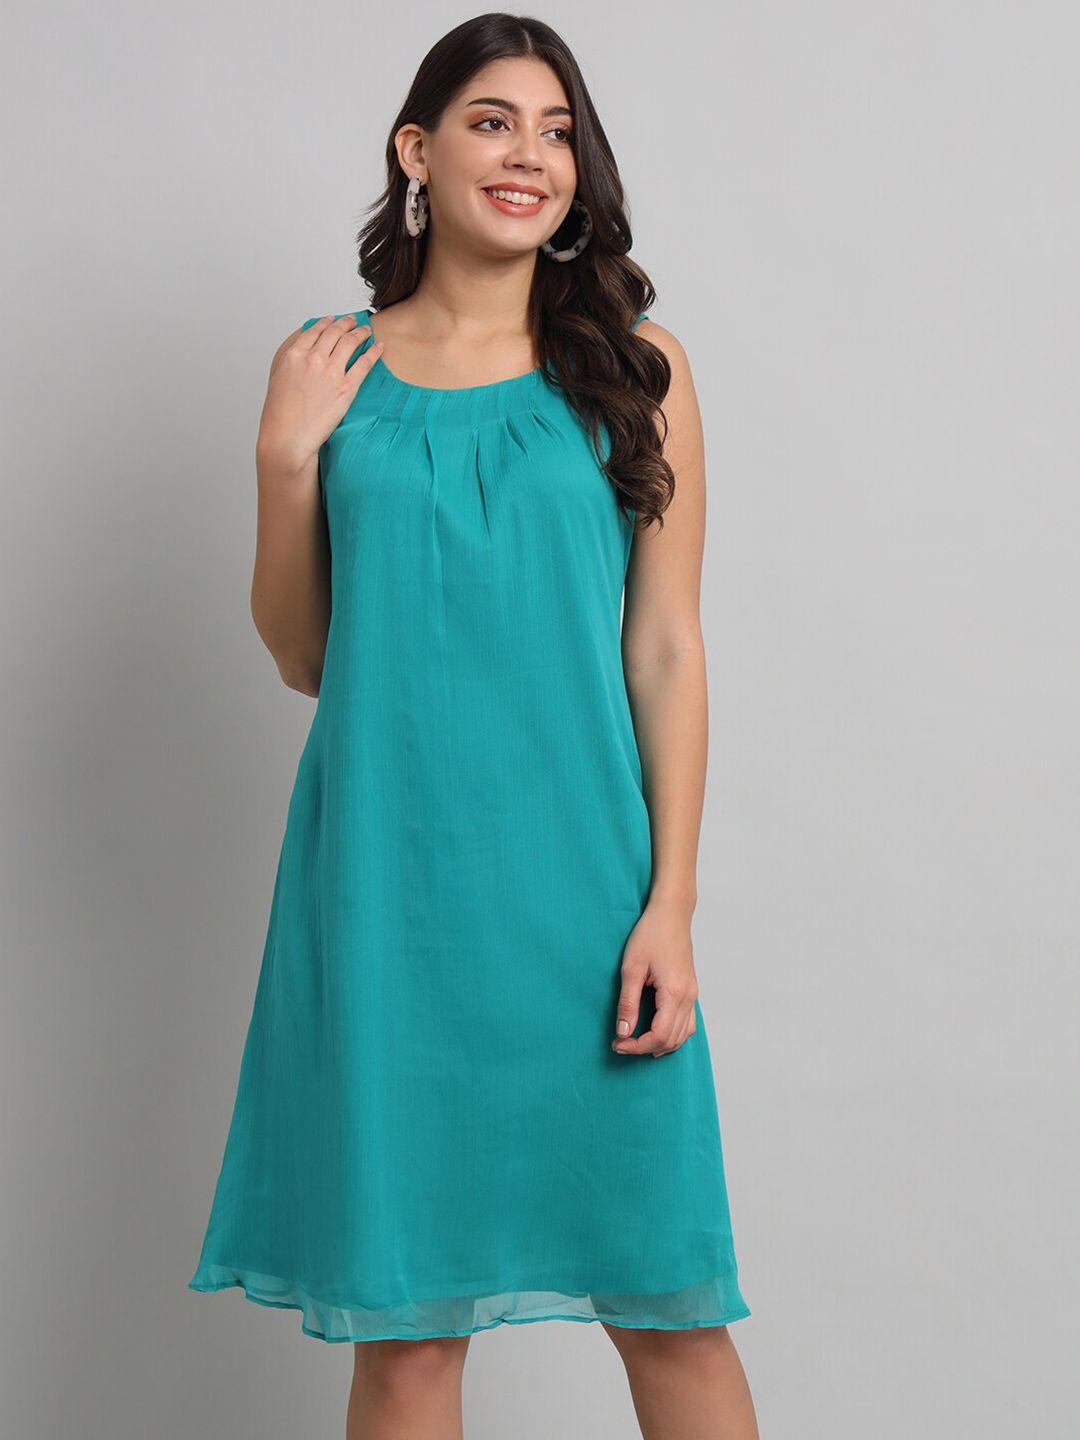 ursense turquoise blue chiffon a-line dress